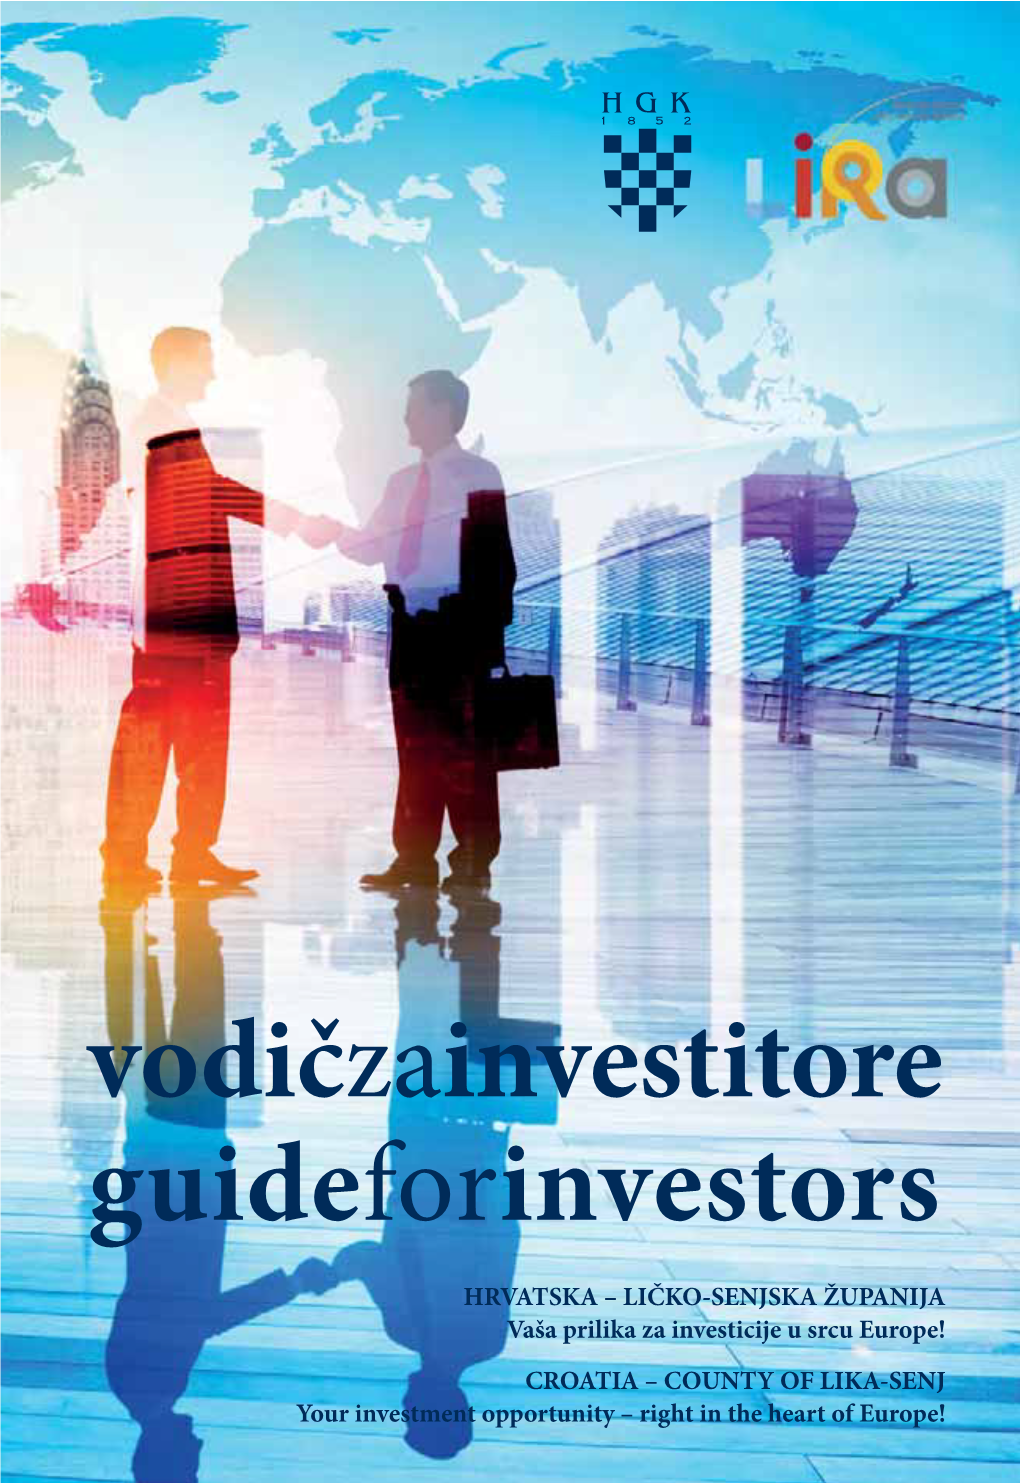 Guideforinvestors Vodičzainvestitore